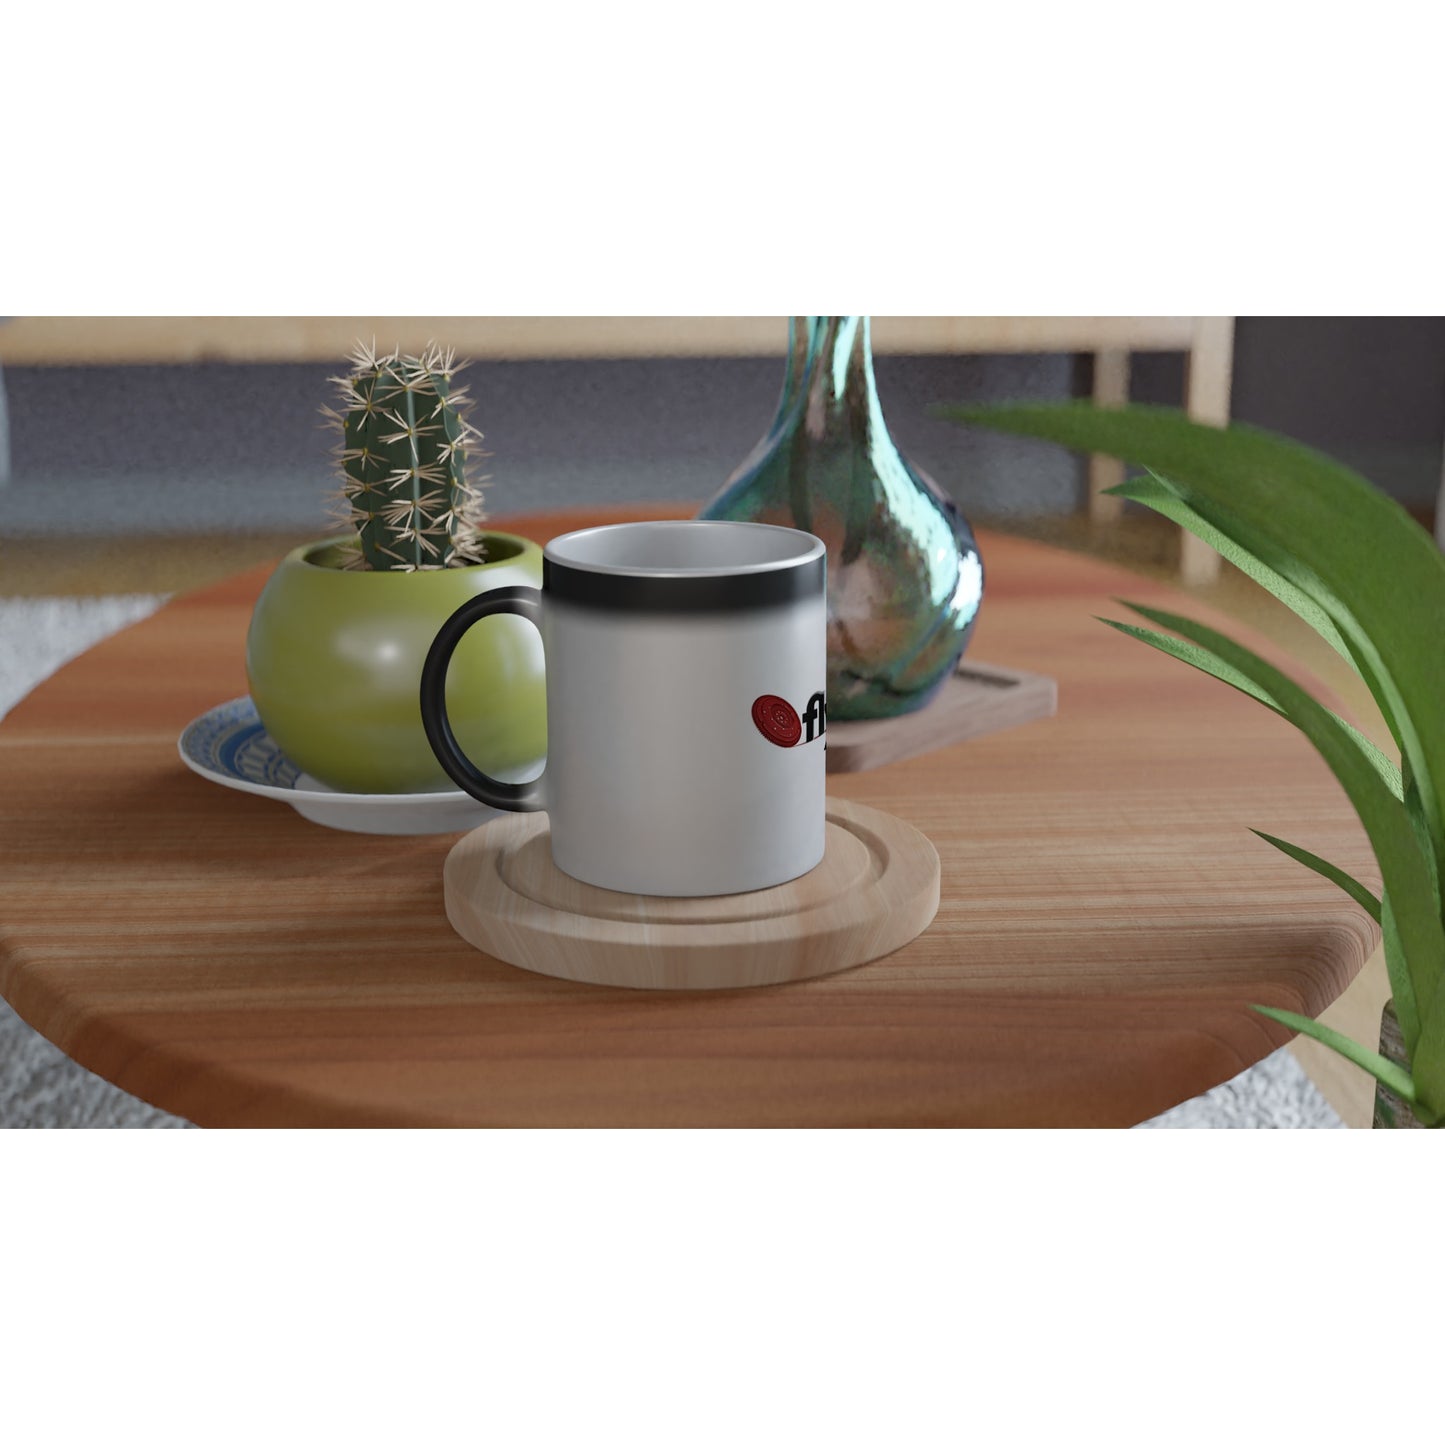 Flywheel Social Enterprise Hub - Magic 11oz Ceramic Mug